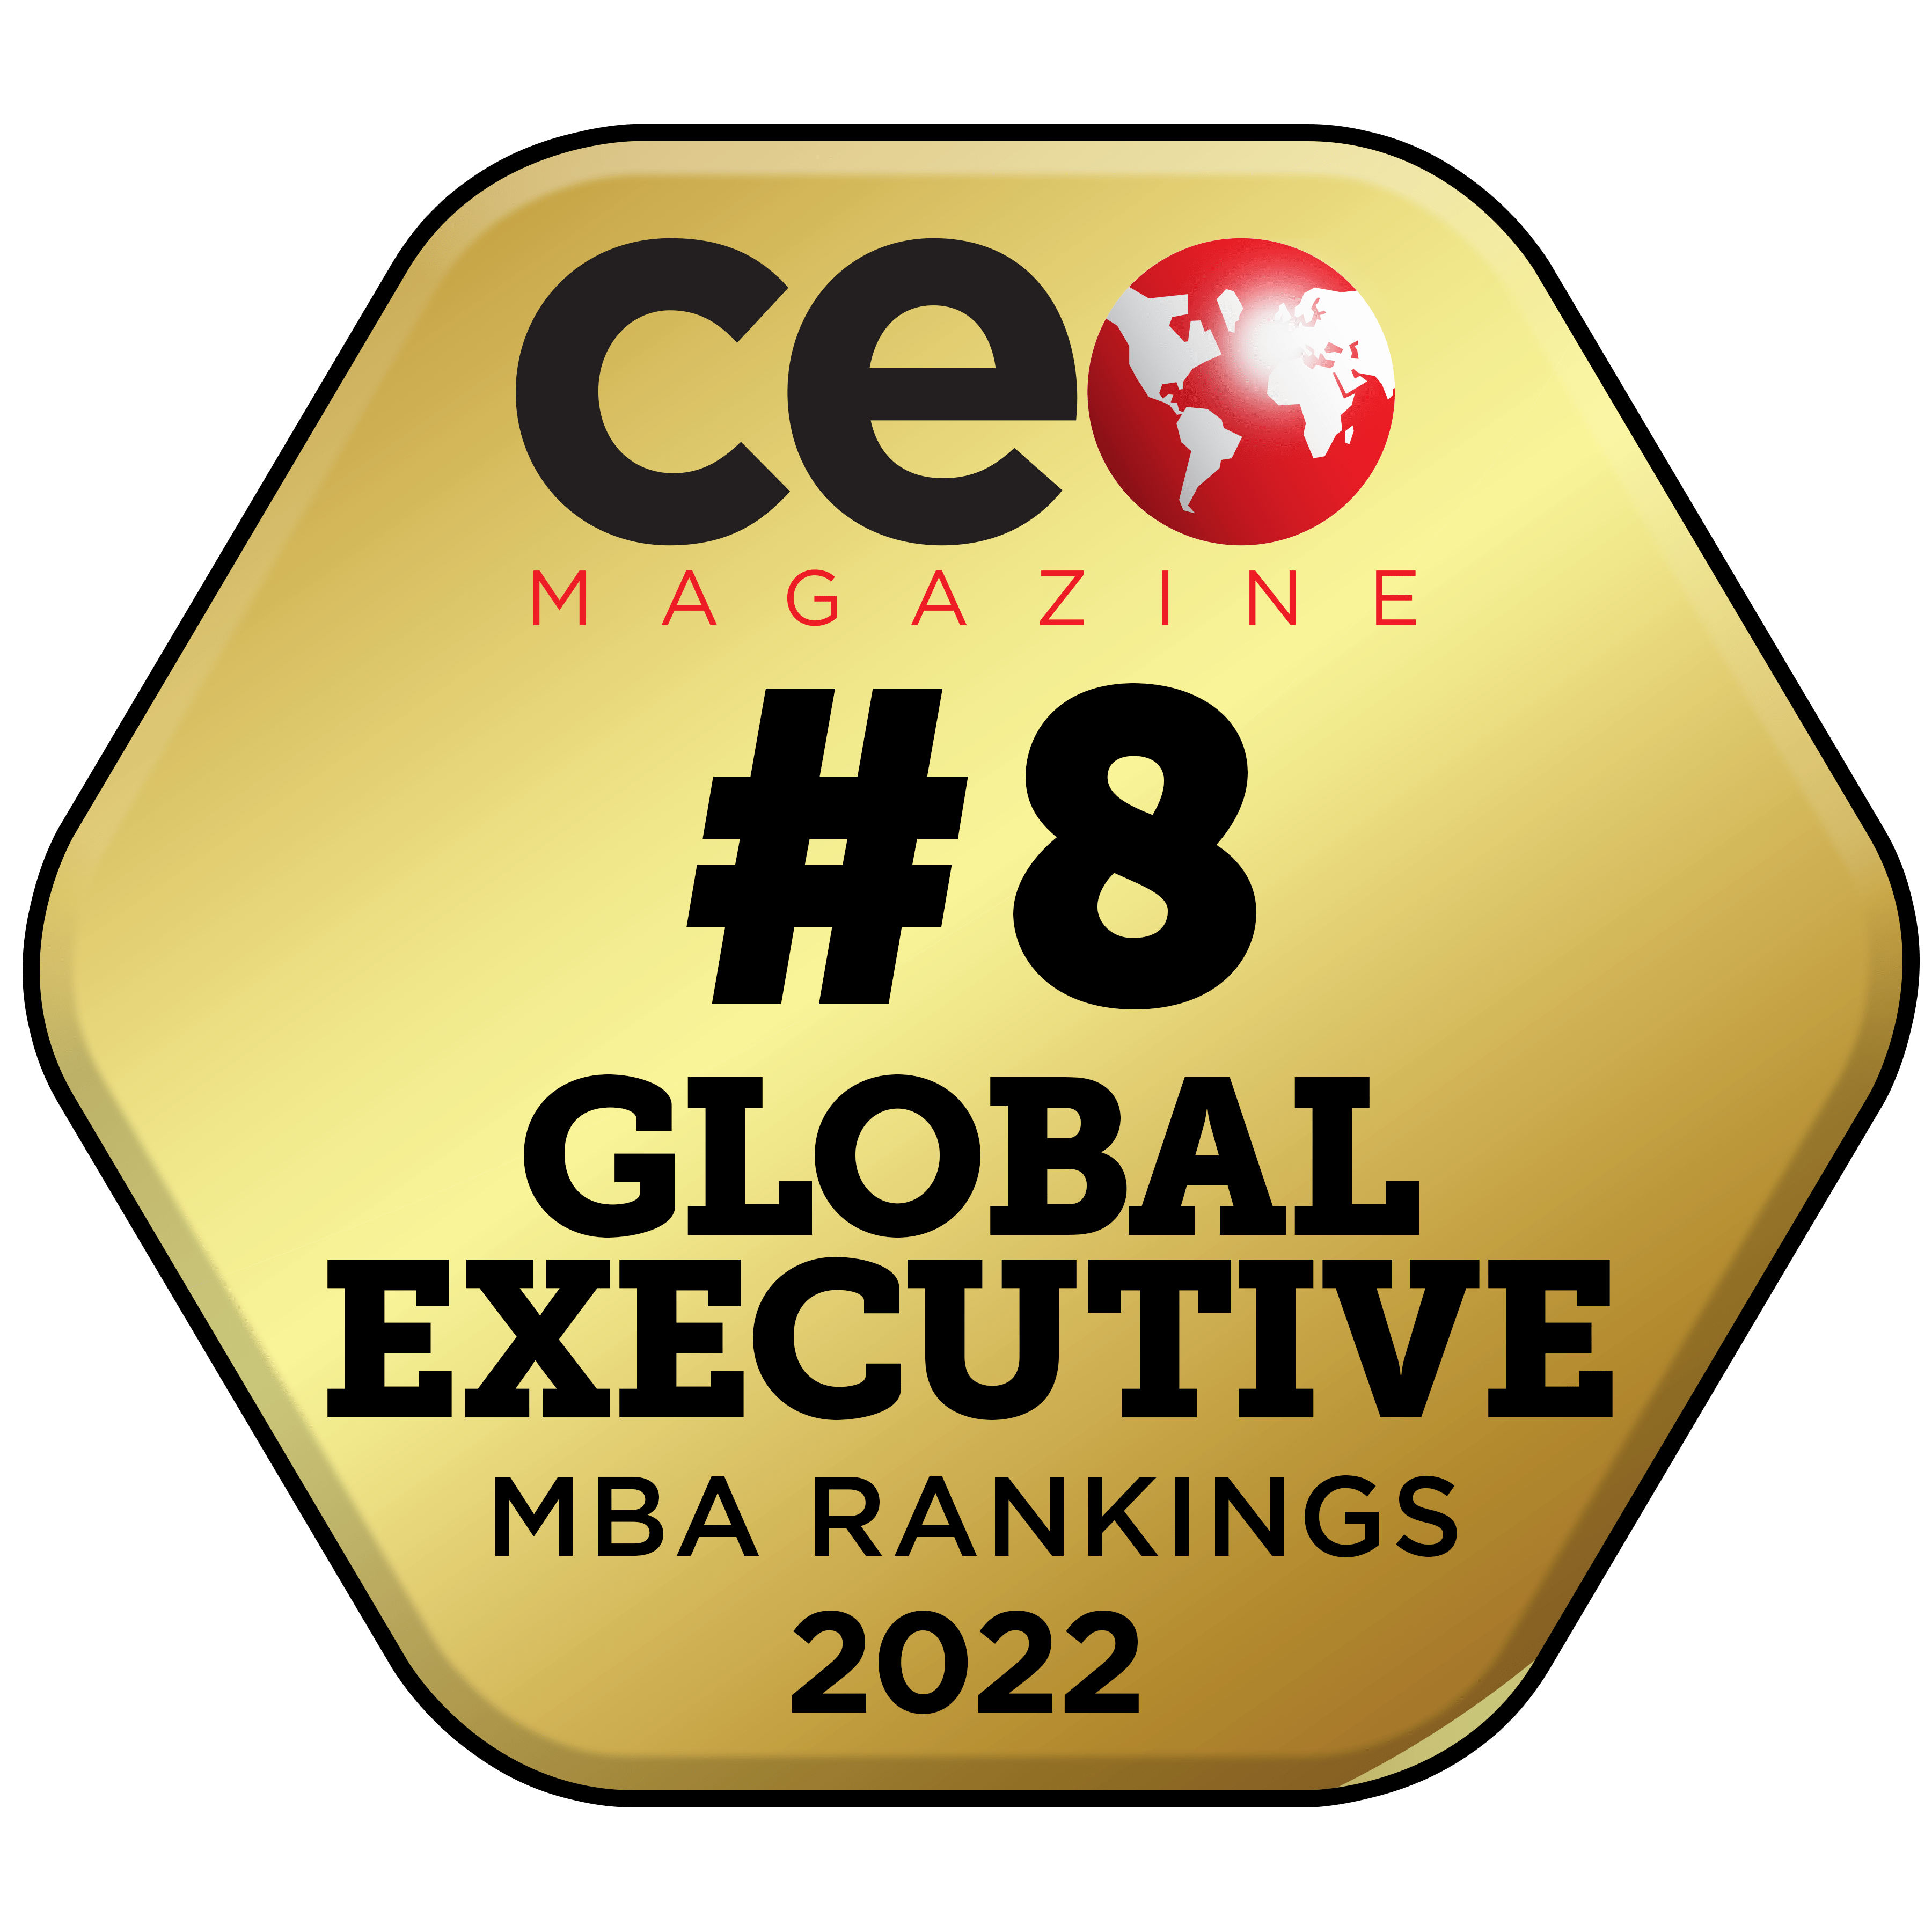 CEO Magazine No. 8 Global Executive MBA Ranking